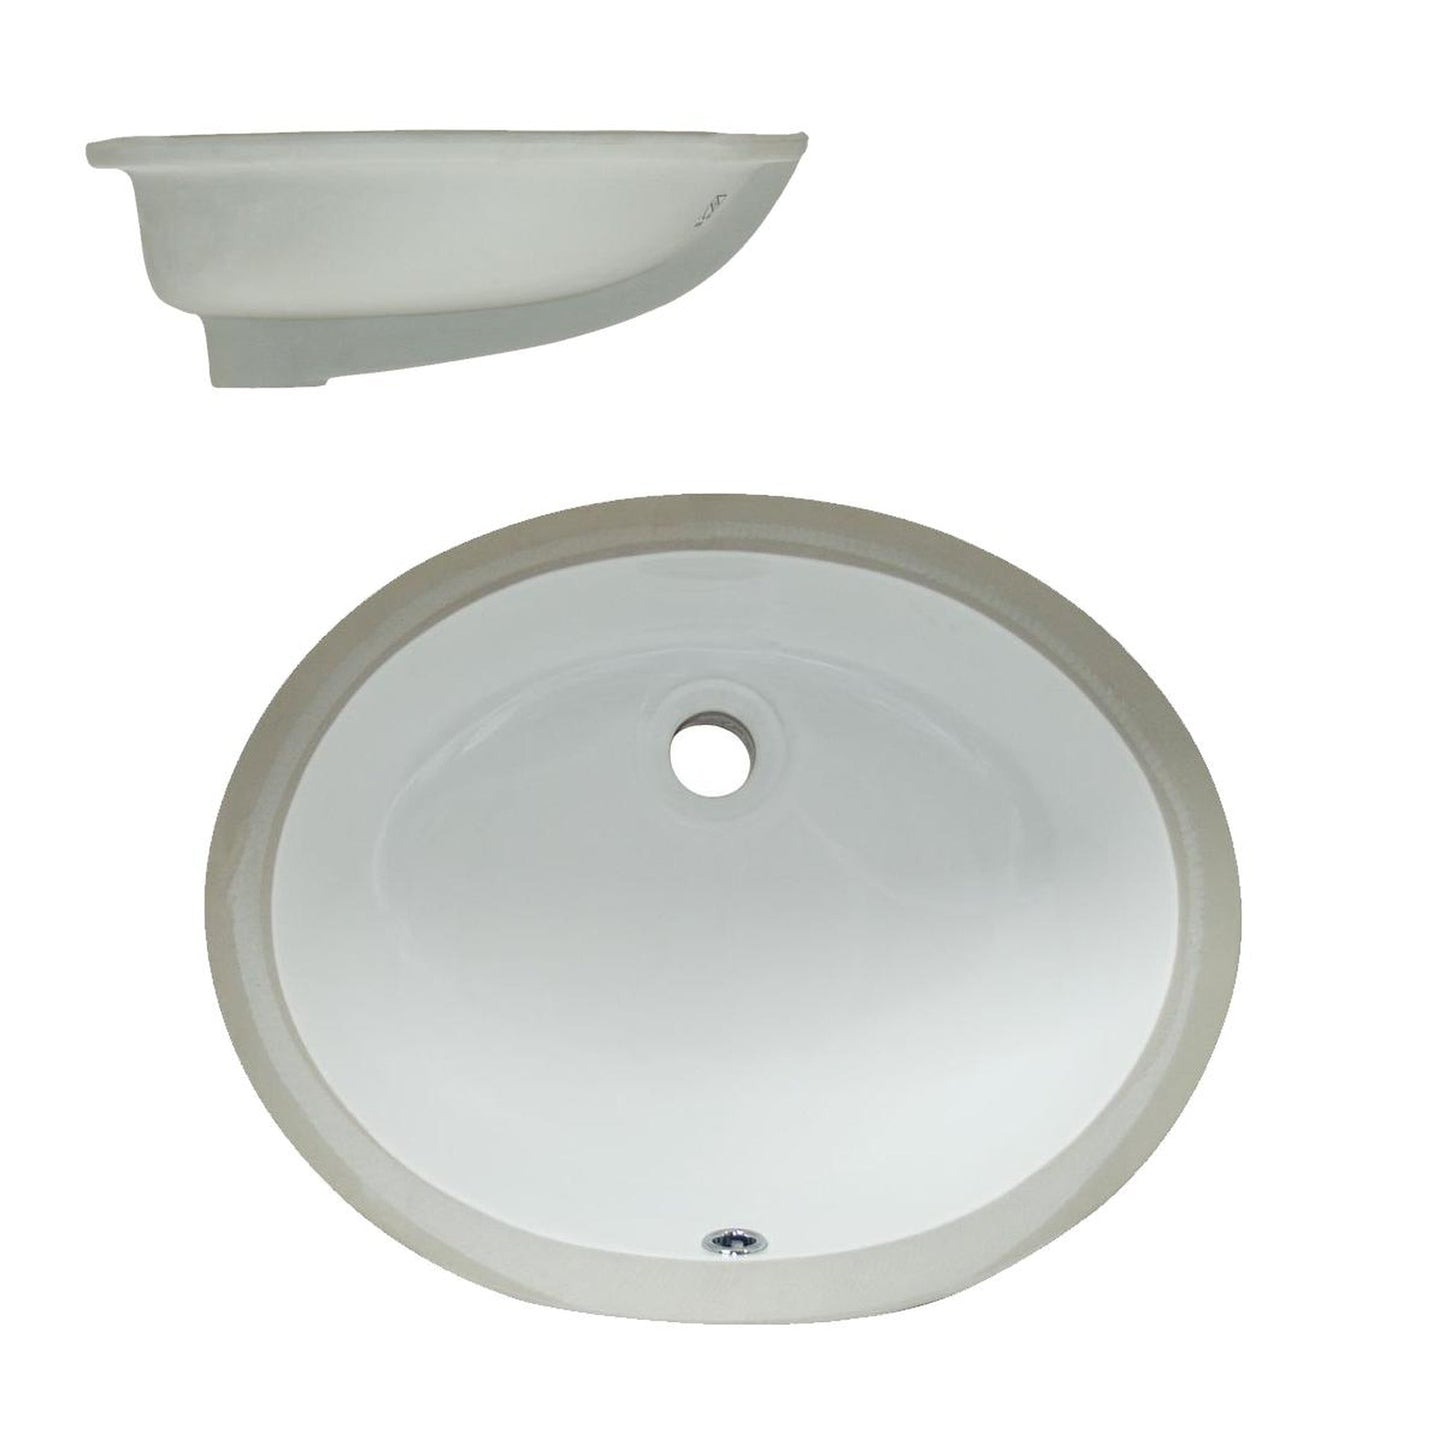 Pelican Int'l Pearl Series PL-3608 16" x 13" ADA Compliant White Porcelain Undermount Bathroom Sink